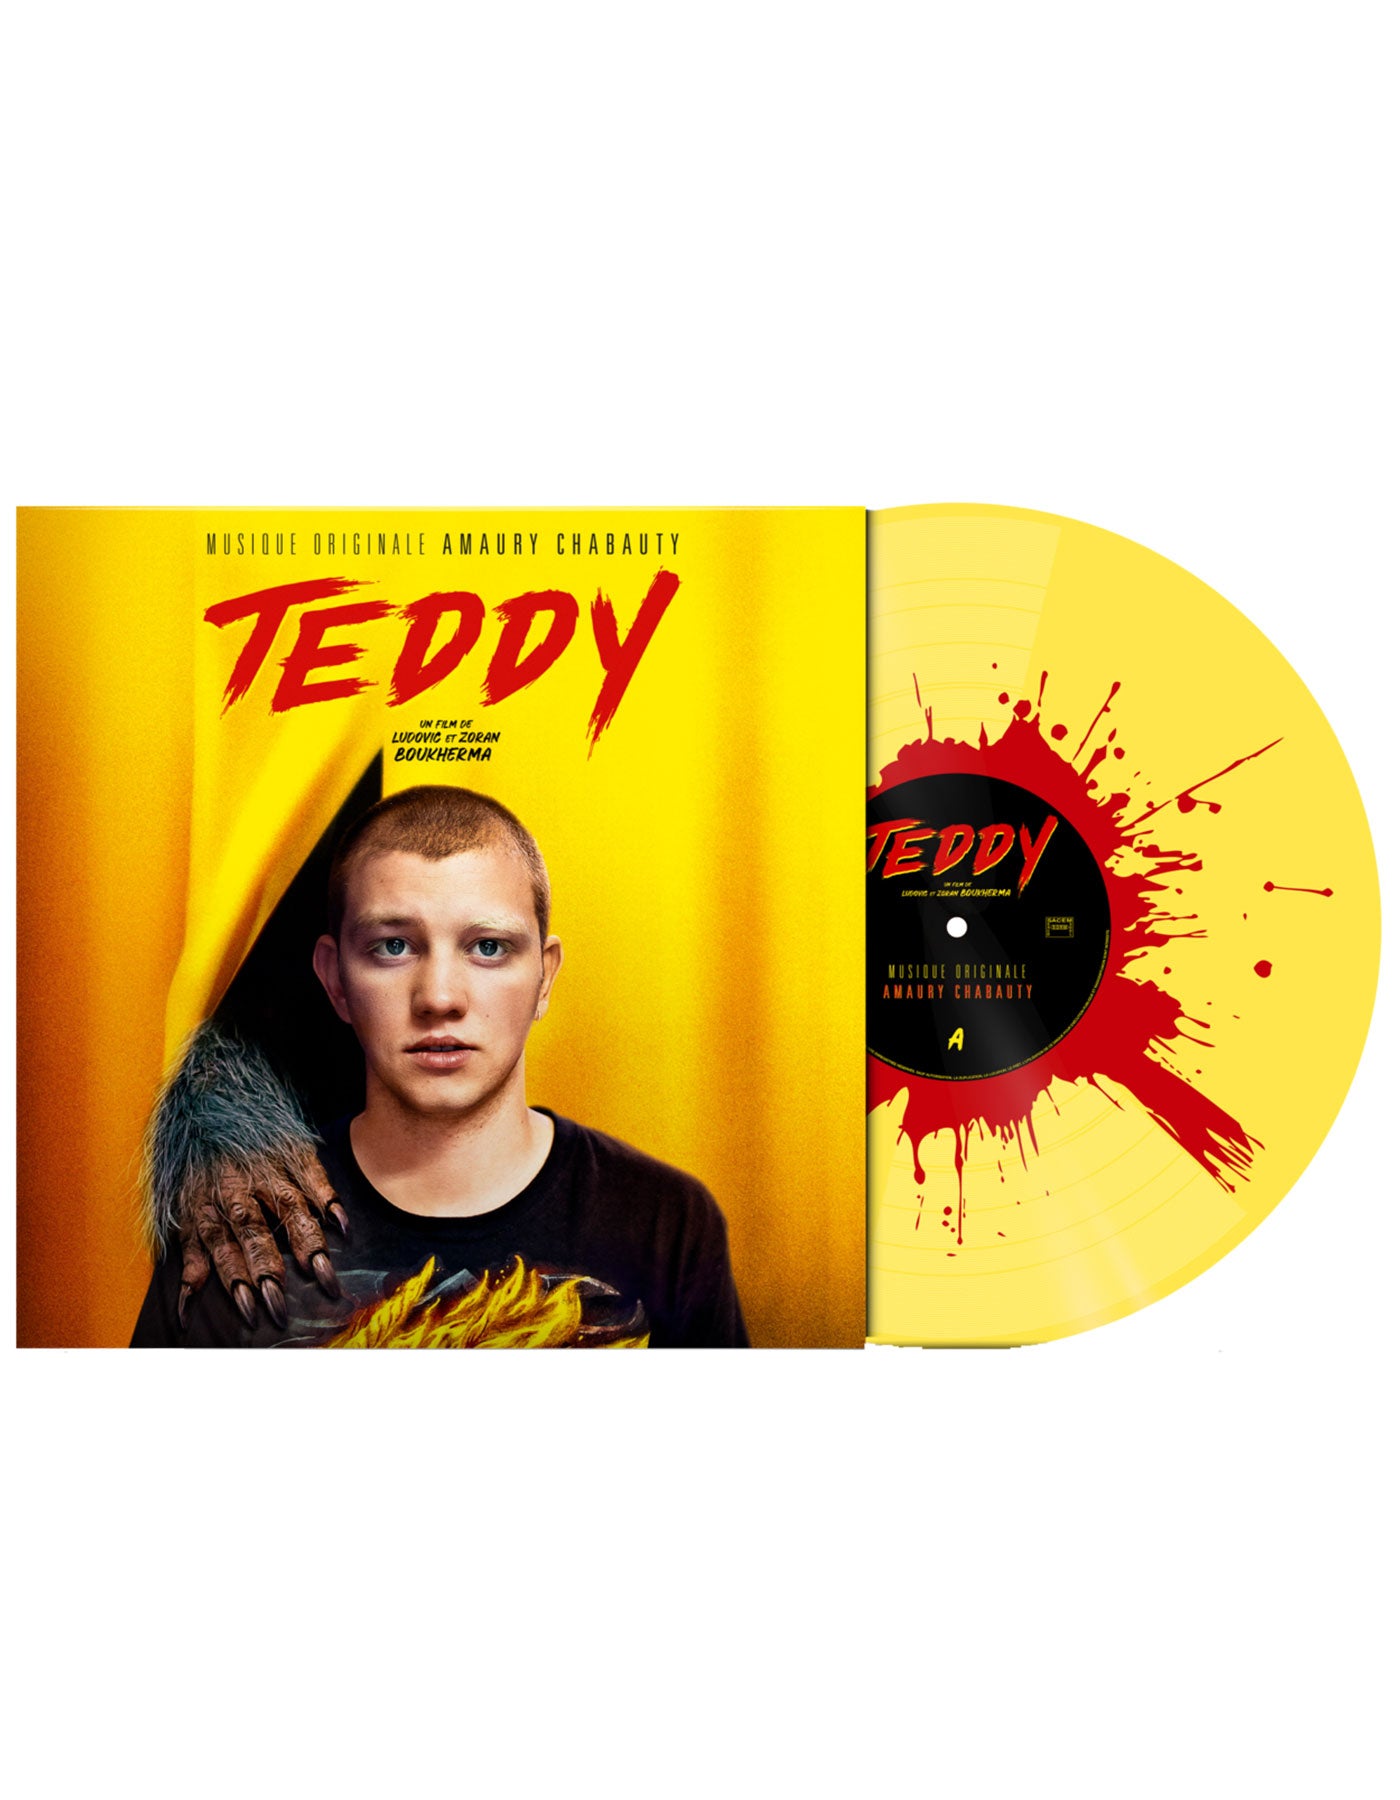 Vinyle collector "Teddy"